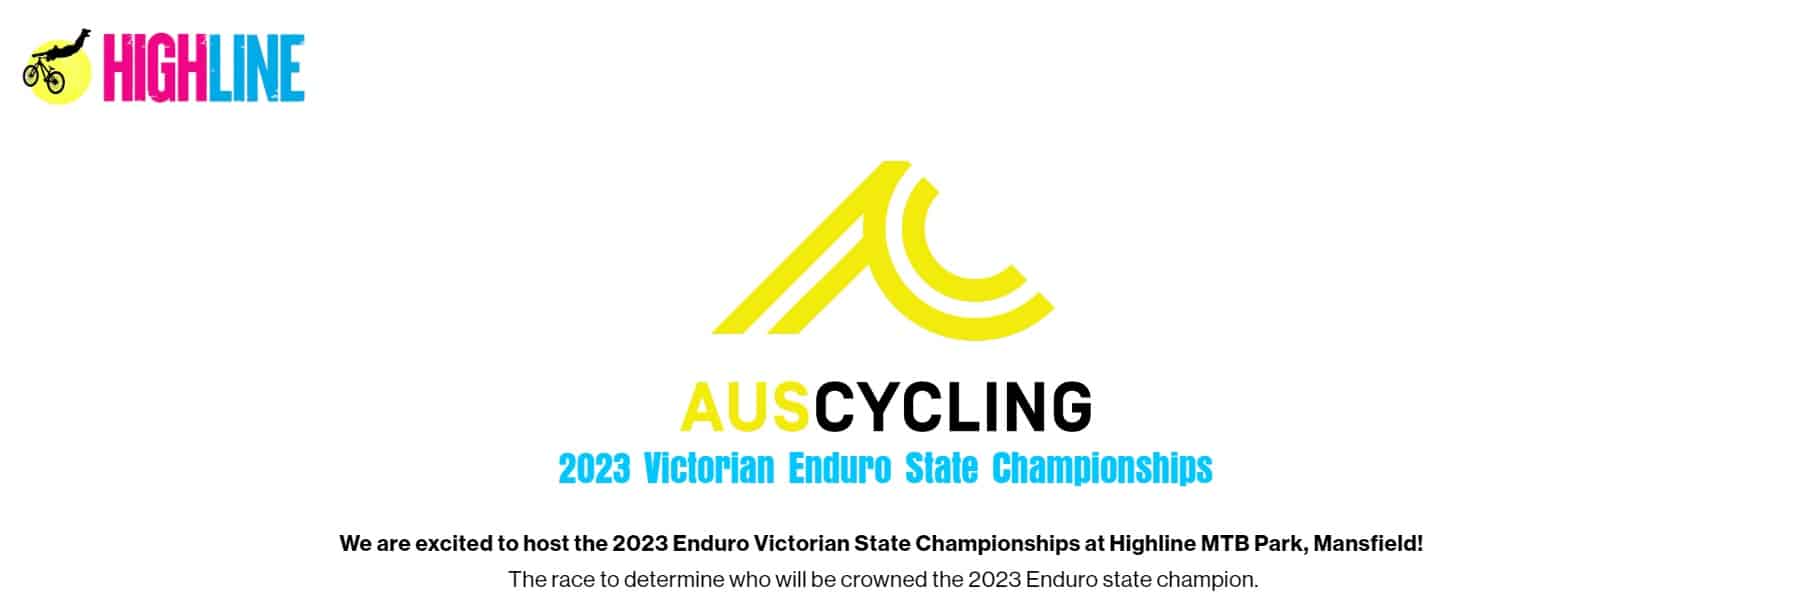 HighlineMTB_AusCycling_2023_Vic_Enduro_State_Champs_banner